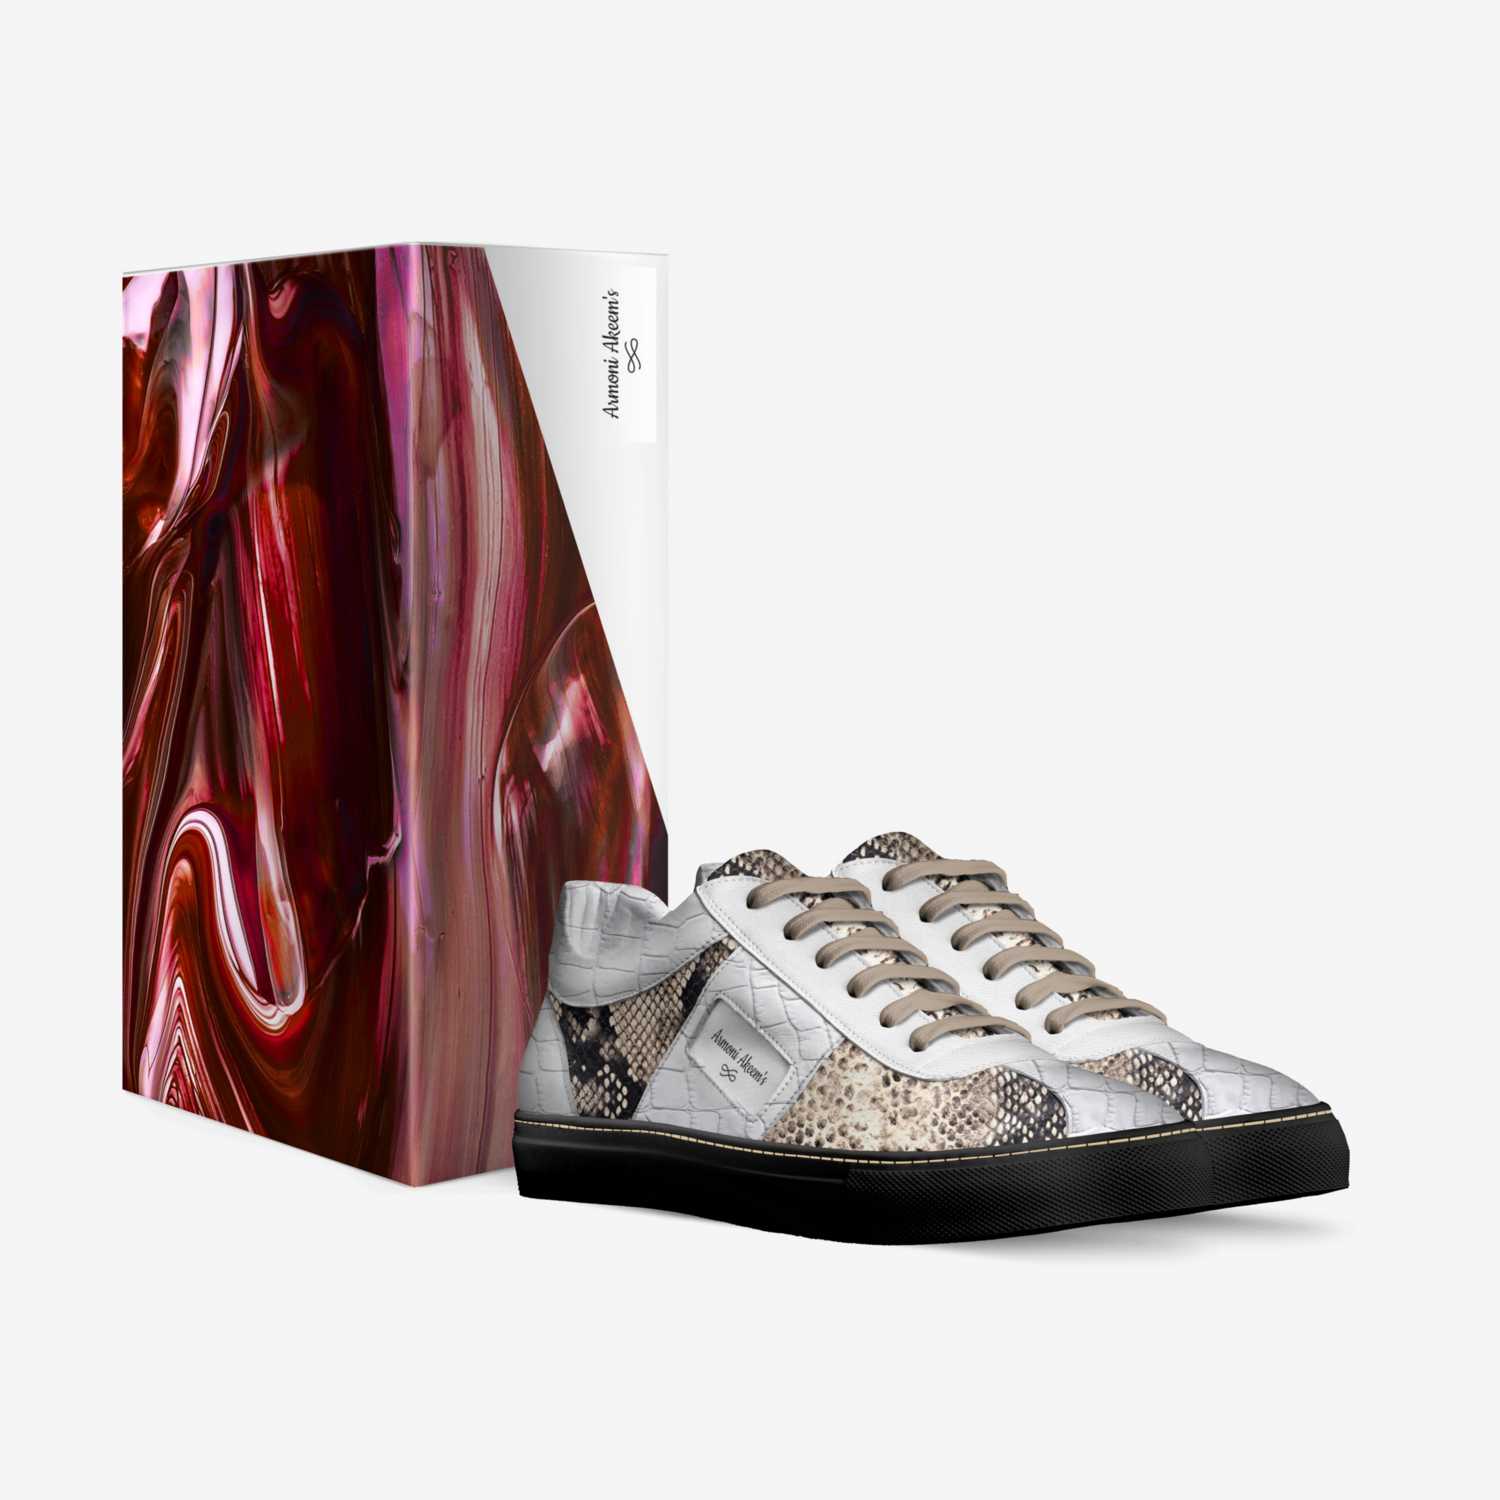 Armoni Akeem's custom made in Italy shoes by Shamond Meyers | Box view